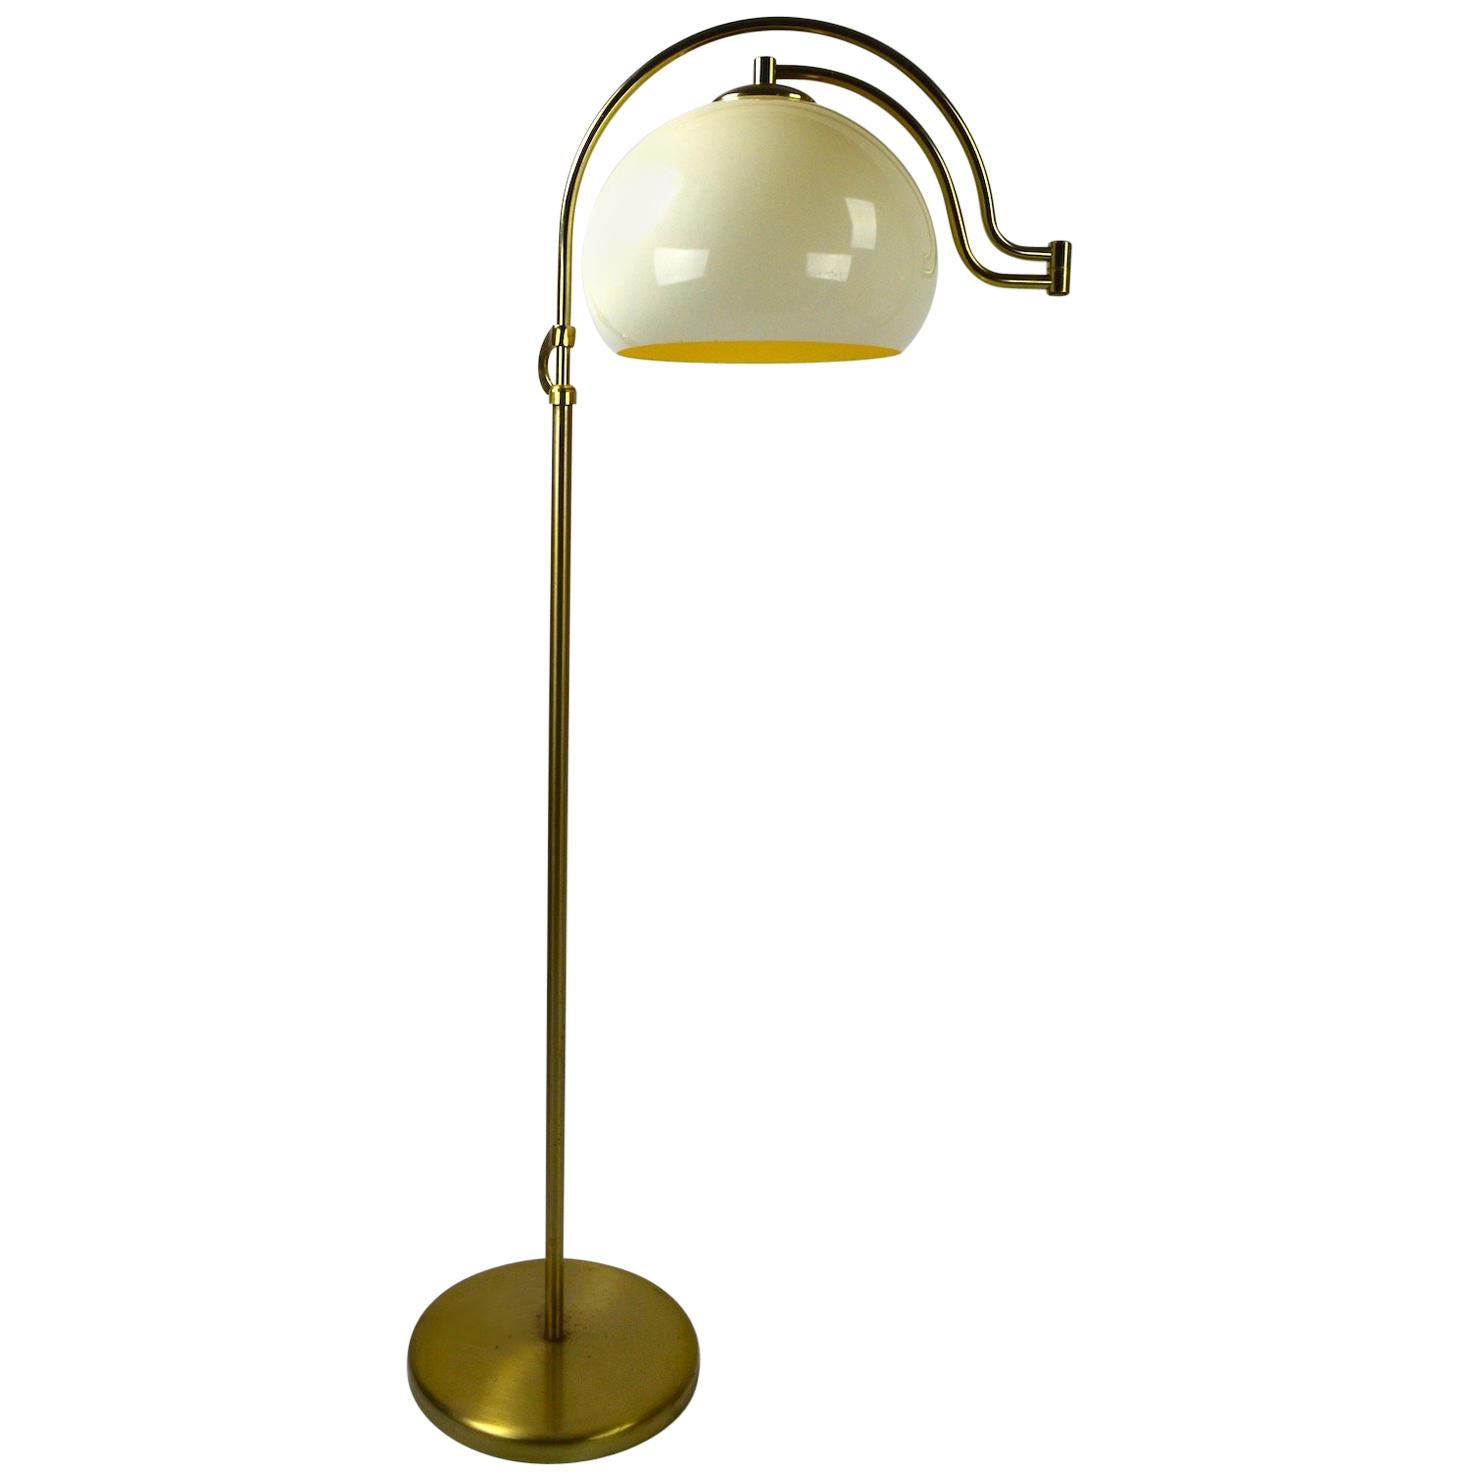 Adjustable Swing Arm Floor Lamp by Laurel